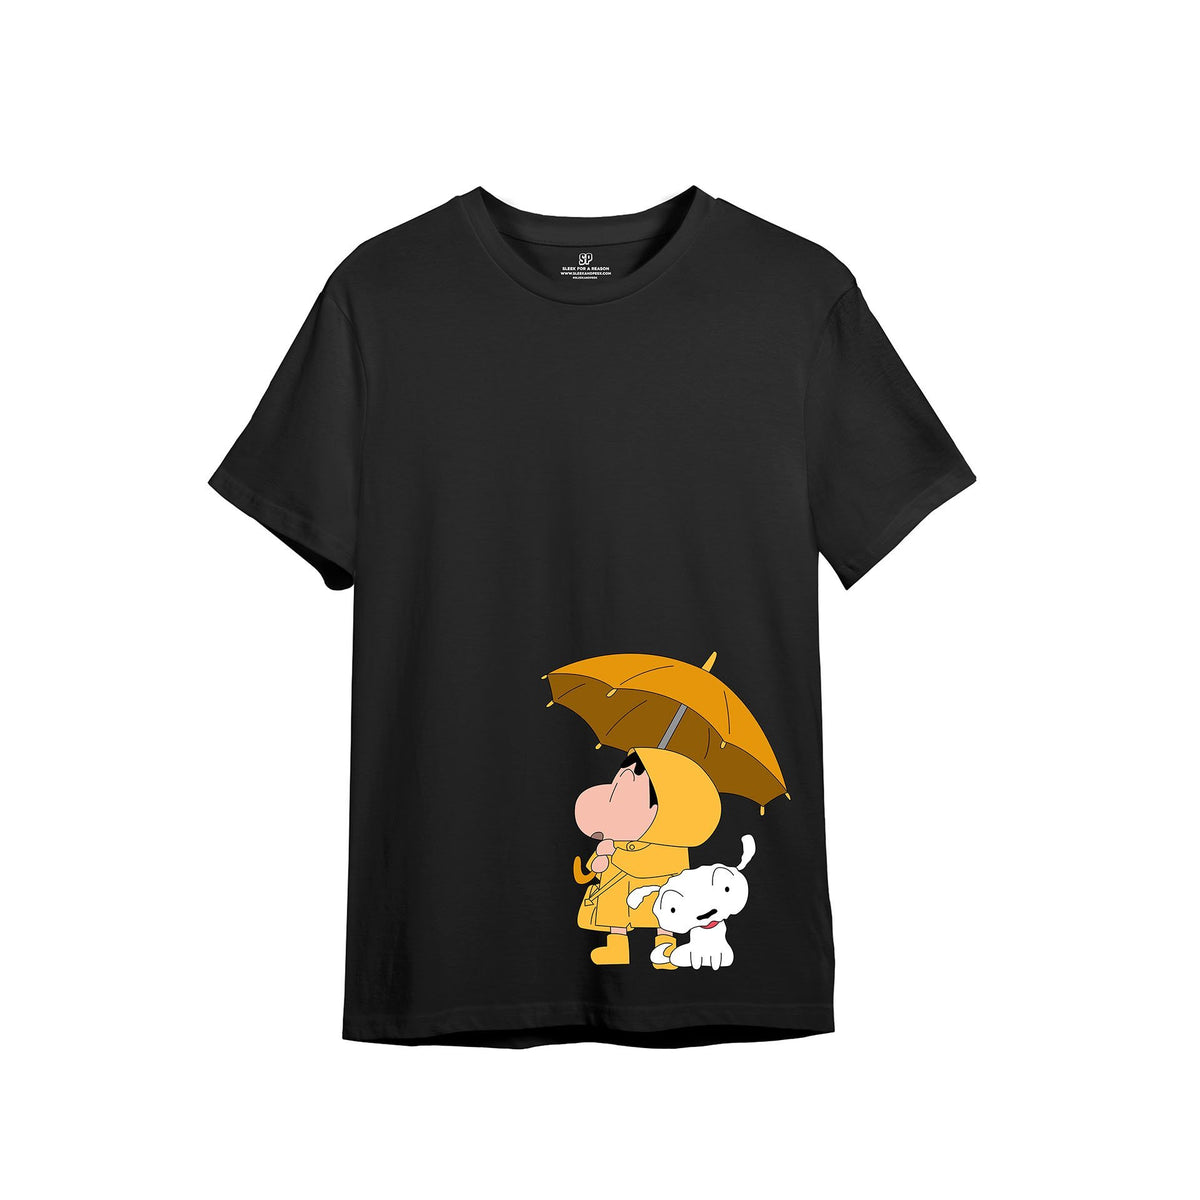 Fisherman Sanpei - Sanpei And Black Bass T-shirt Mix Gray (XL Size)